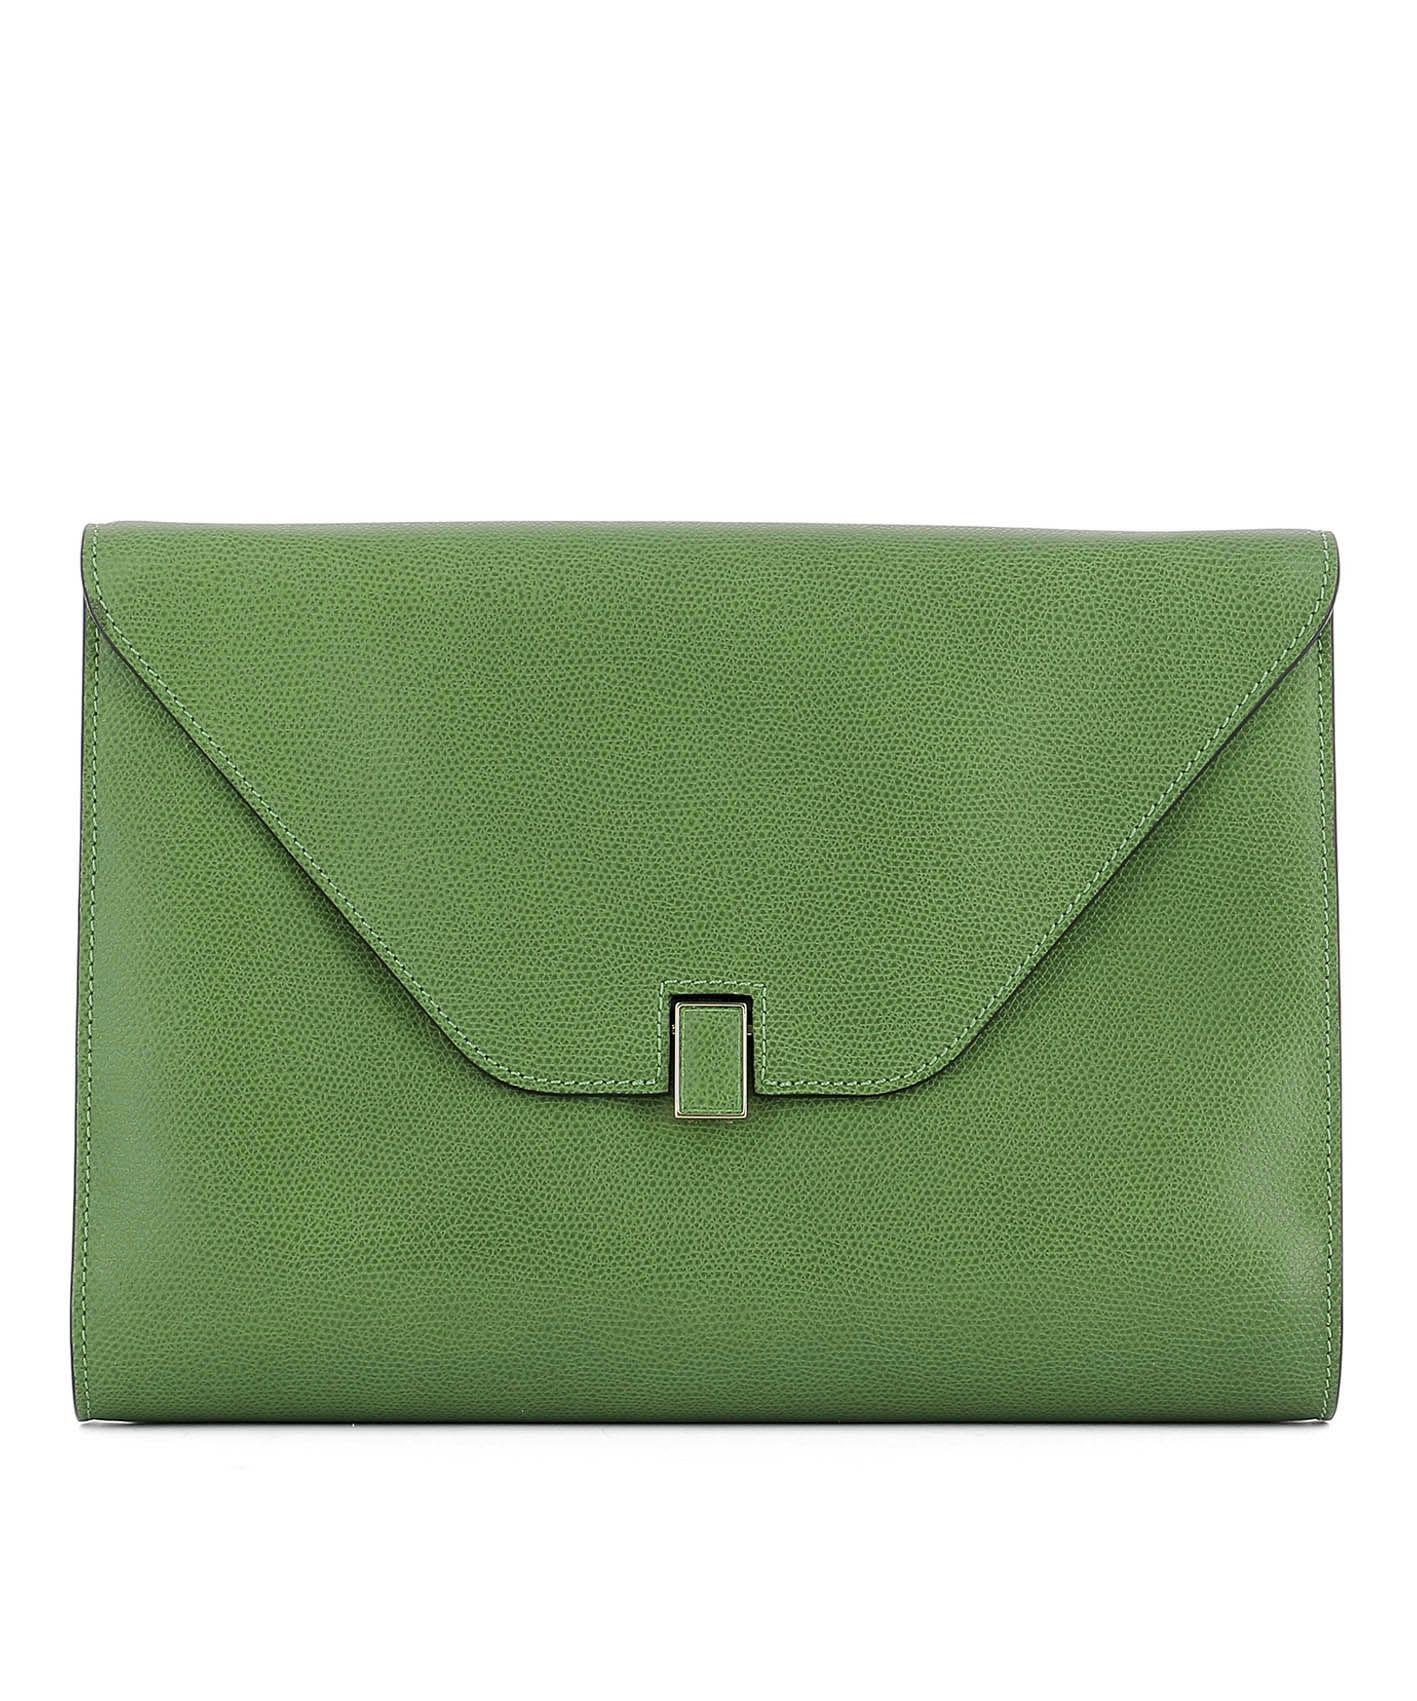 Valextra Green Leather Pochette | ModeSens